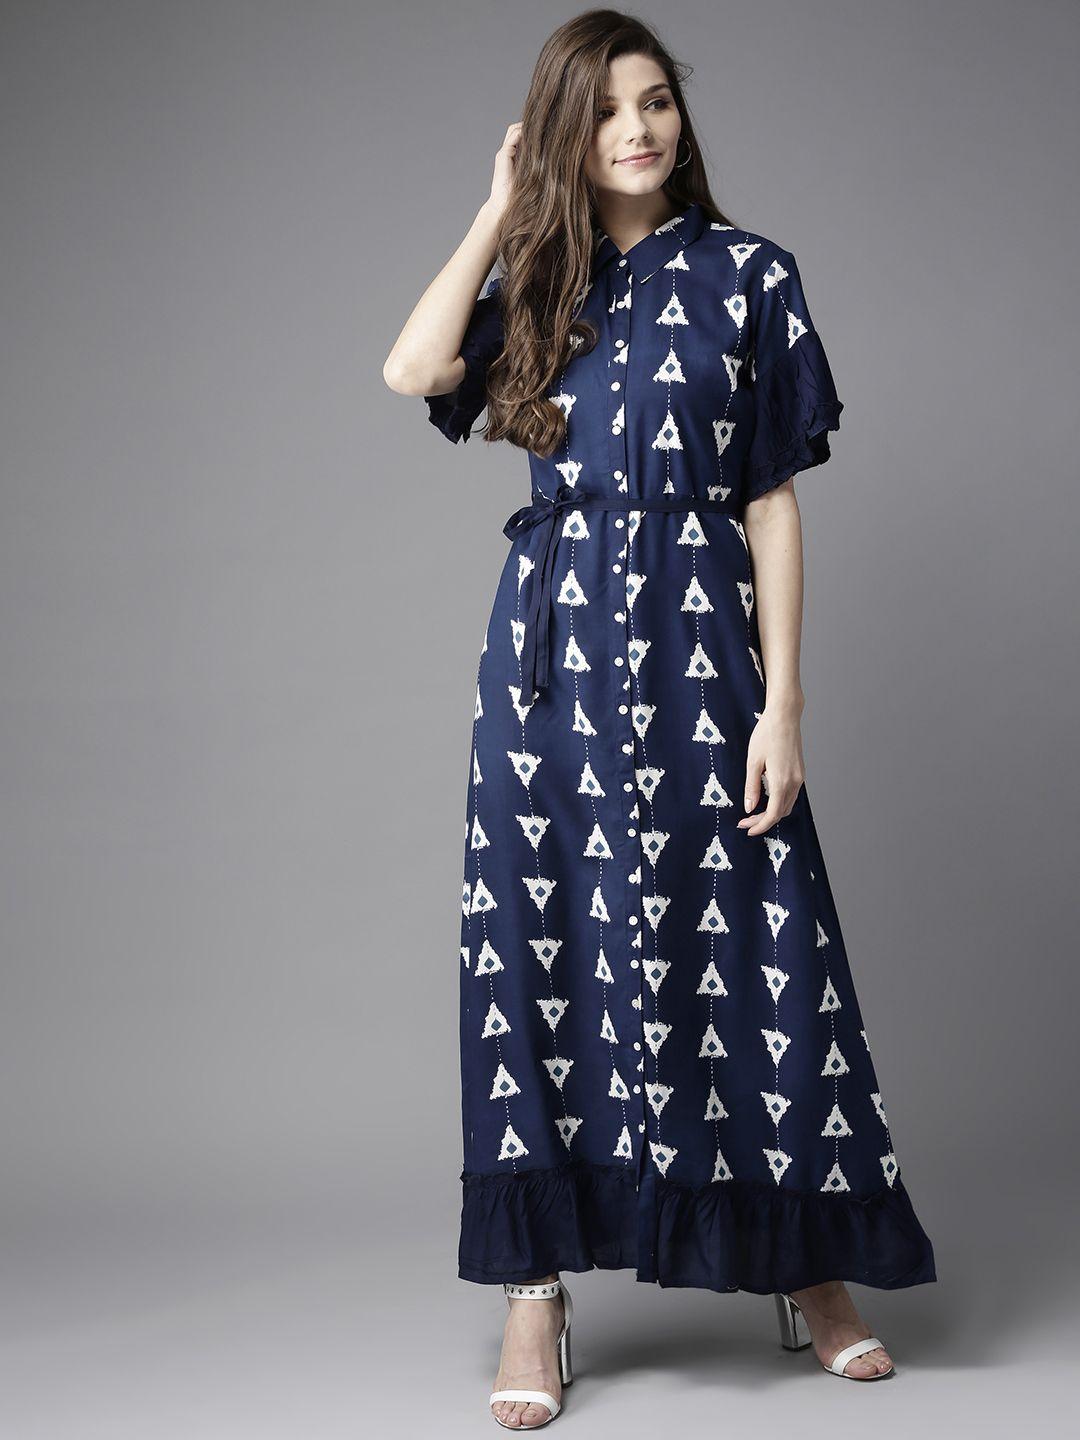 here&now women navy blue & white printed maxi shirt dress